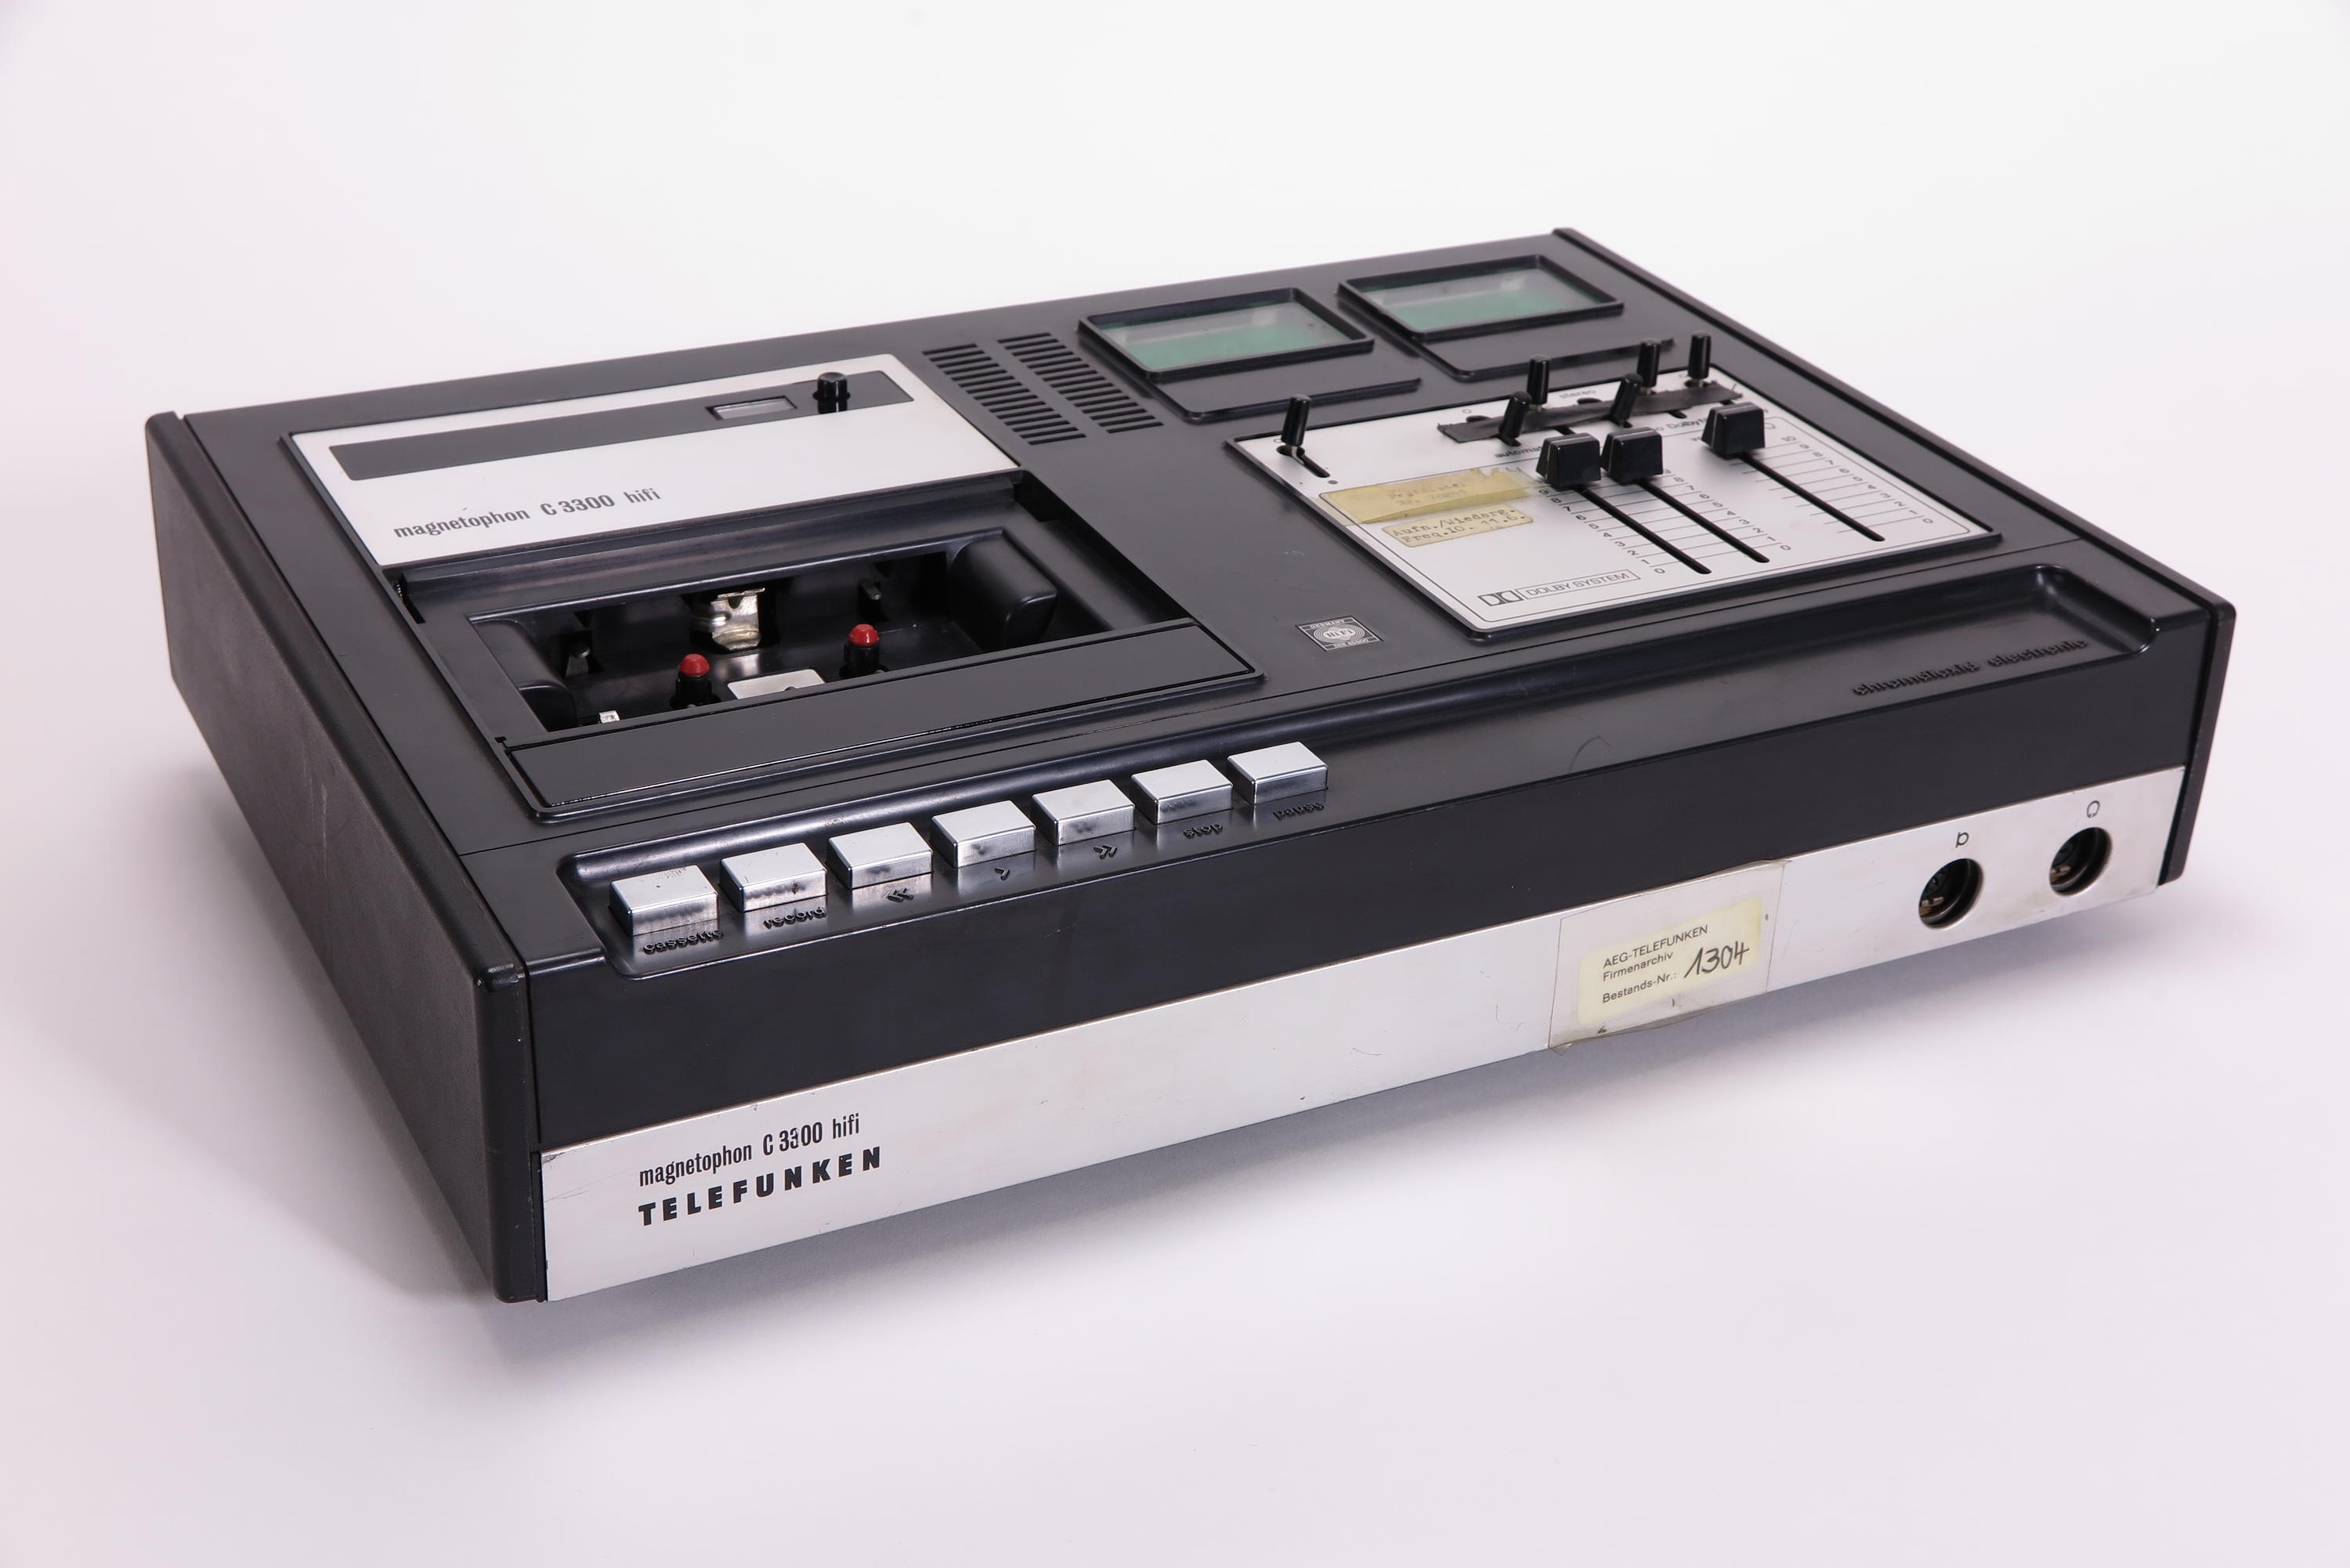 Kassettenrekorder Telefunken Magnetophon C3300 HiFi (Deutsches Technikmuseum CC BY)